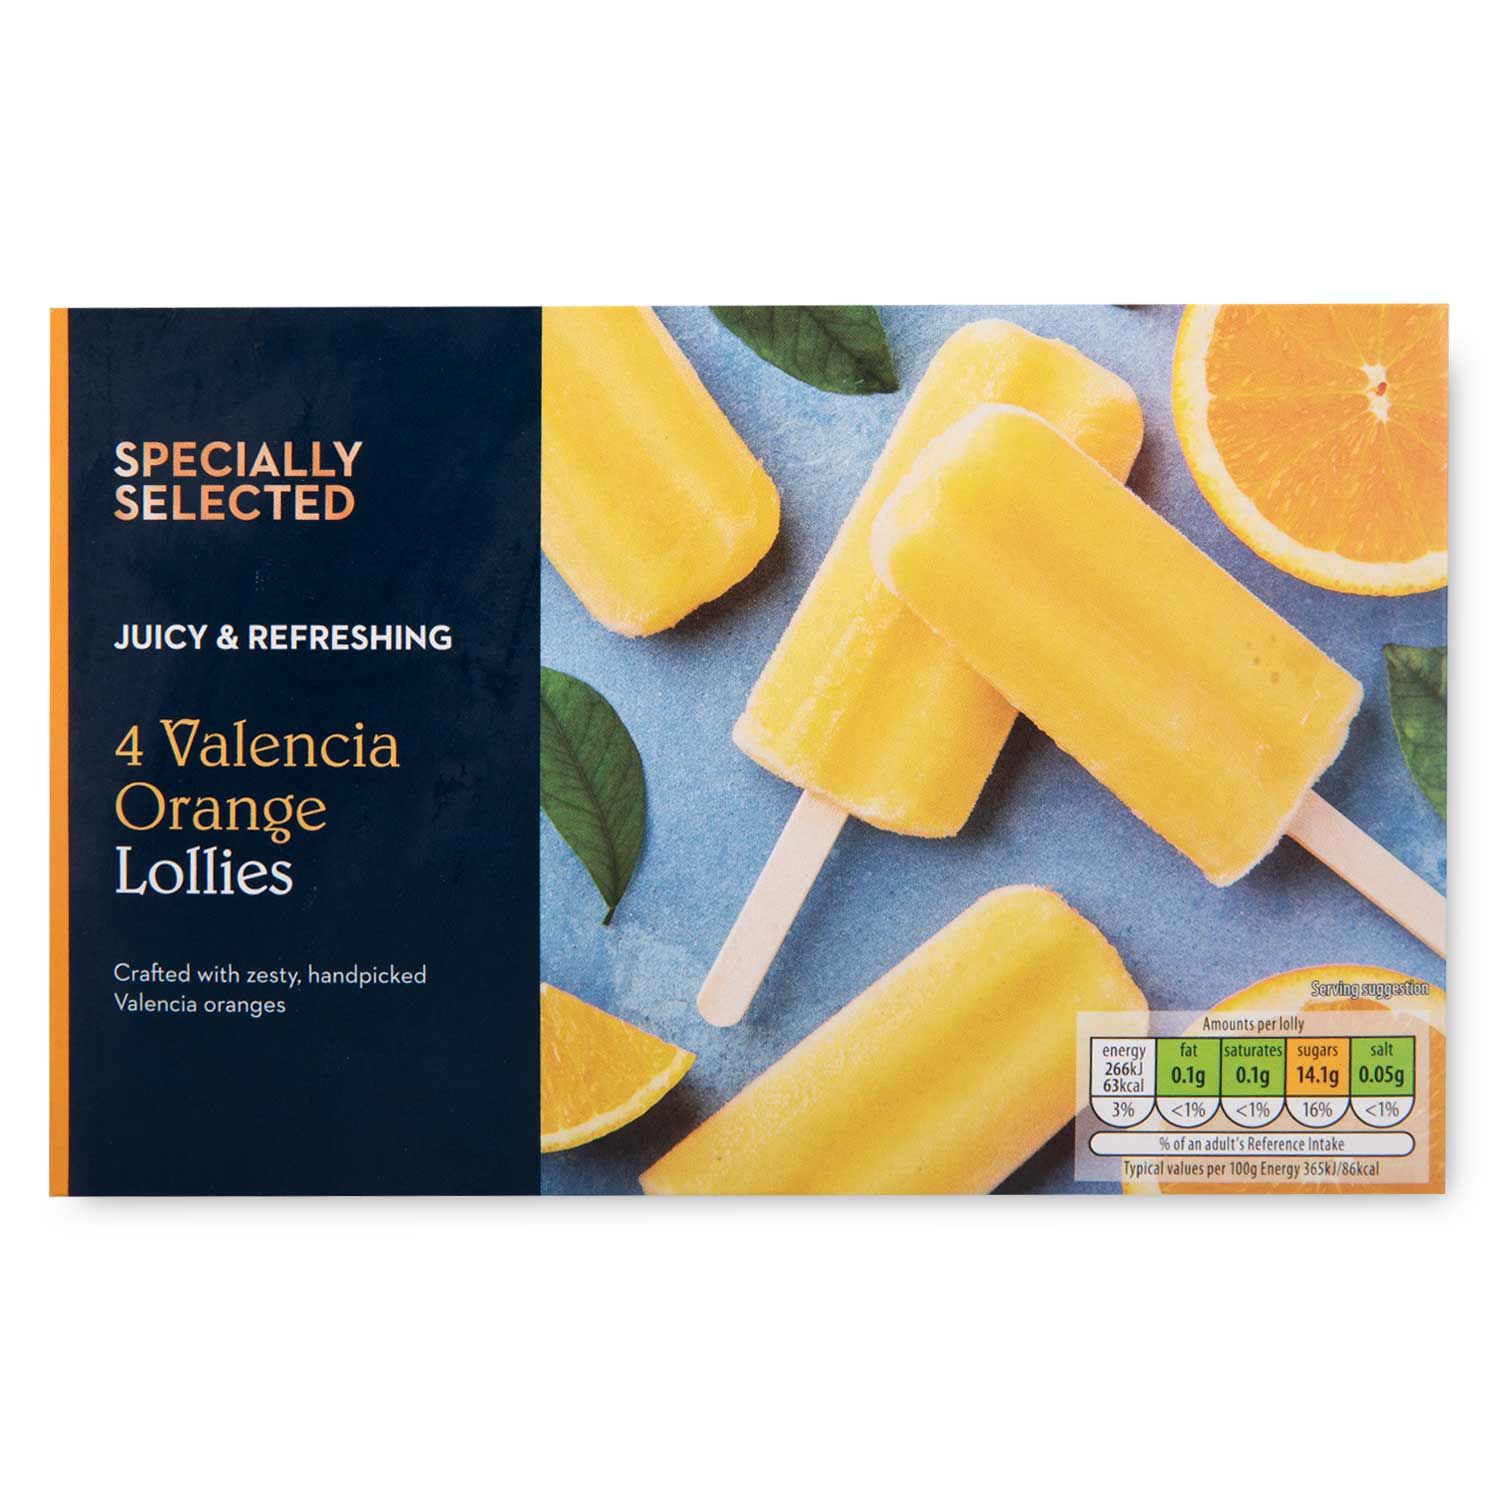 Specially Selected Valencia Orange Lollies 4x73ml | ALDI